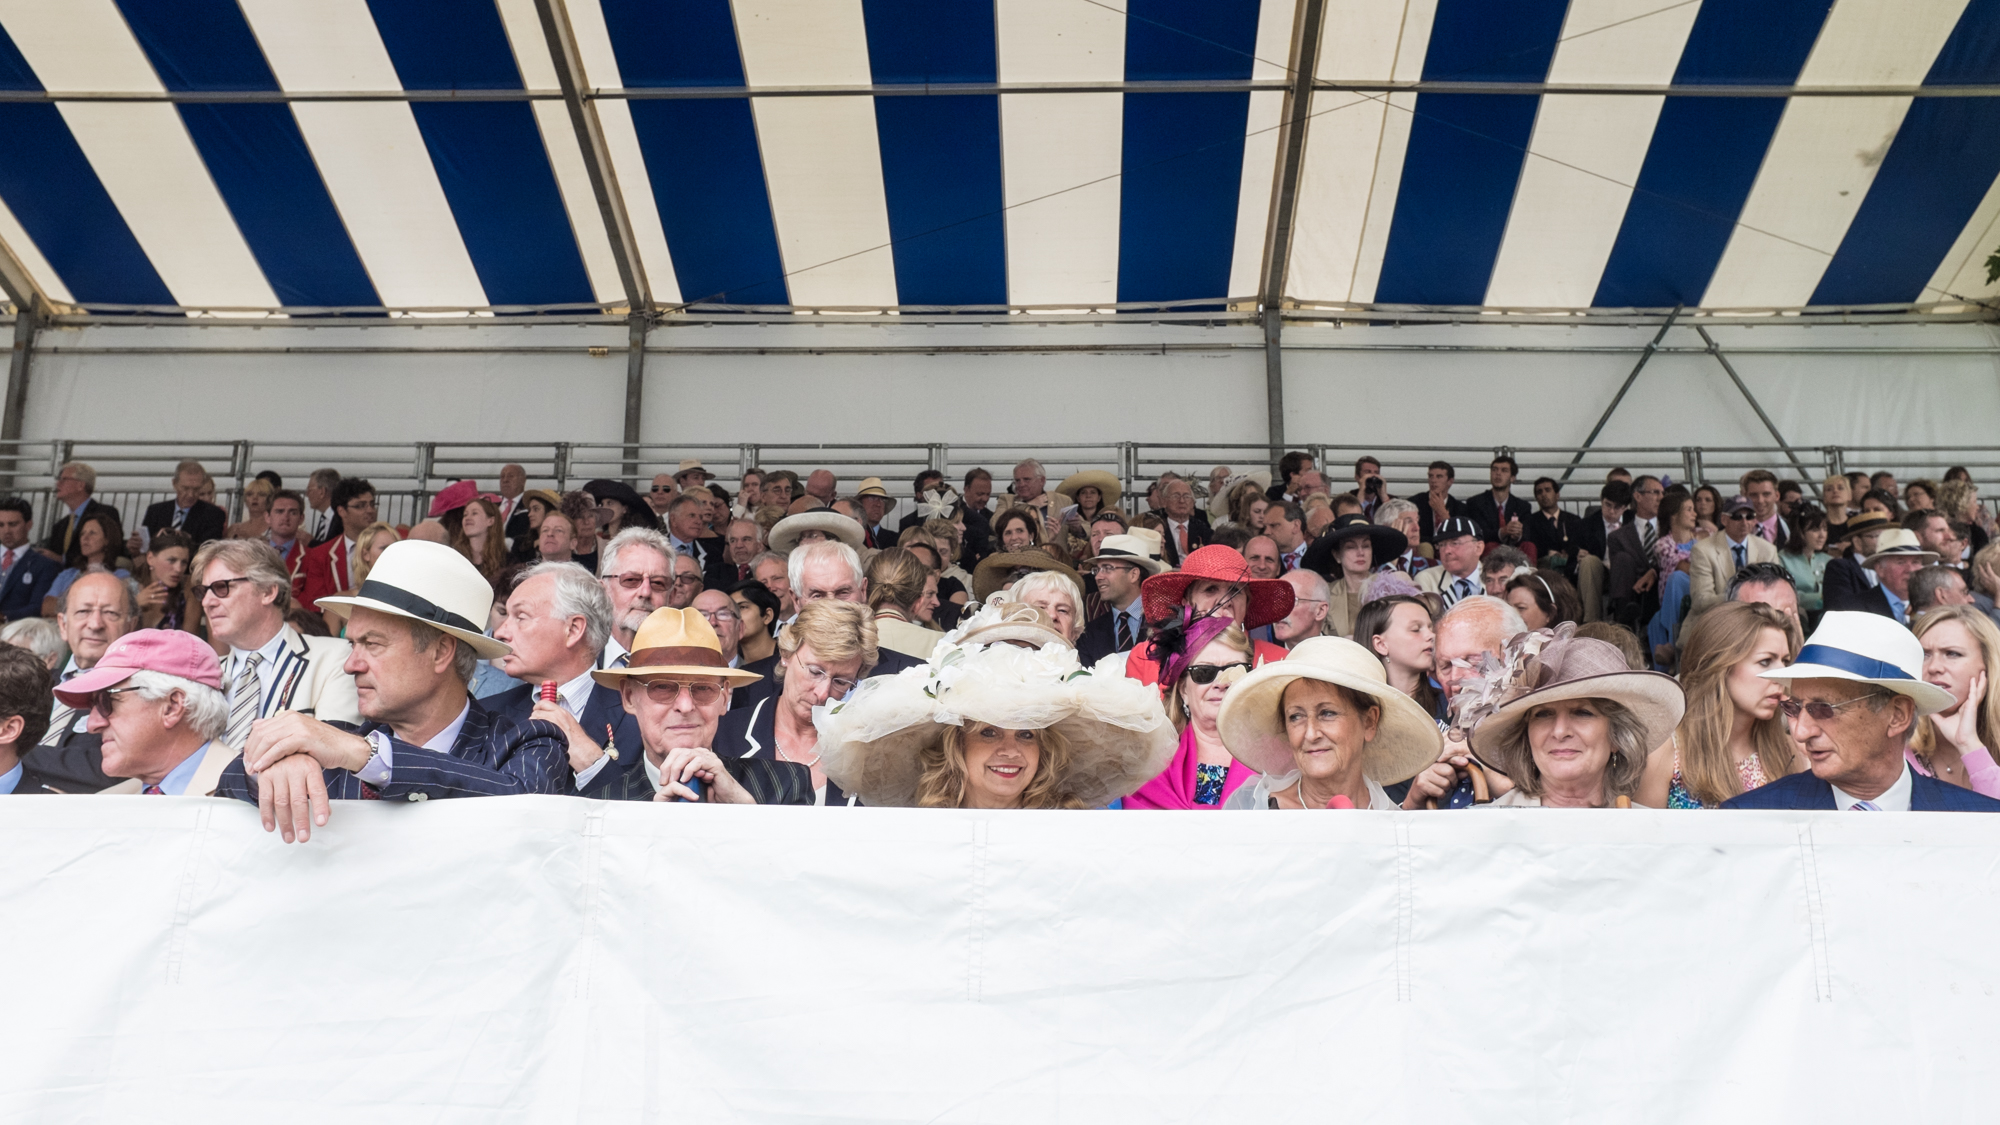  Spectators in the Steward's Enclosure grandstand at Henley Royal Regatta. 